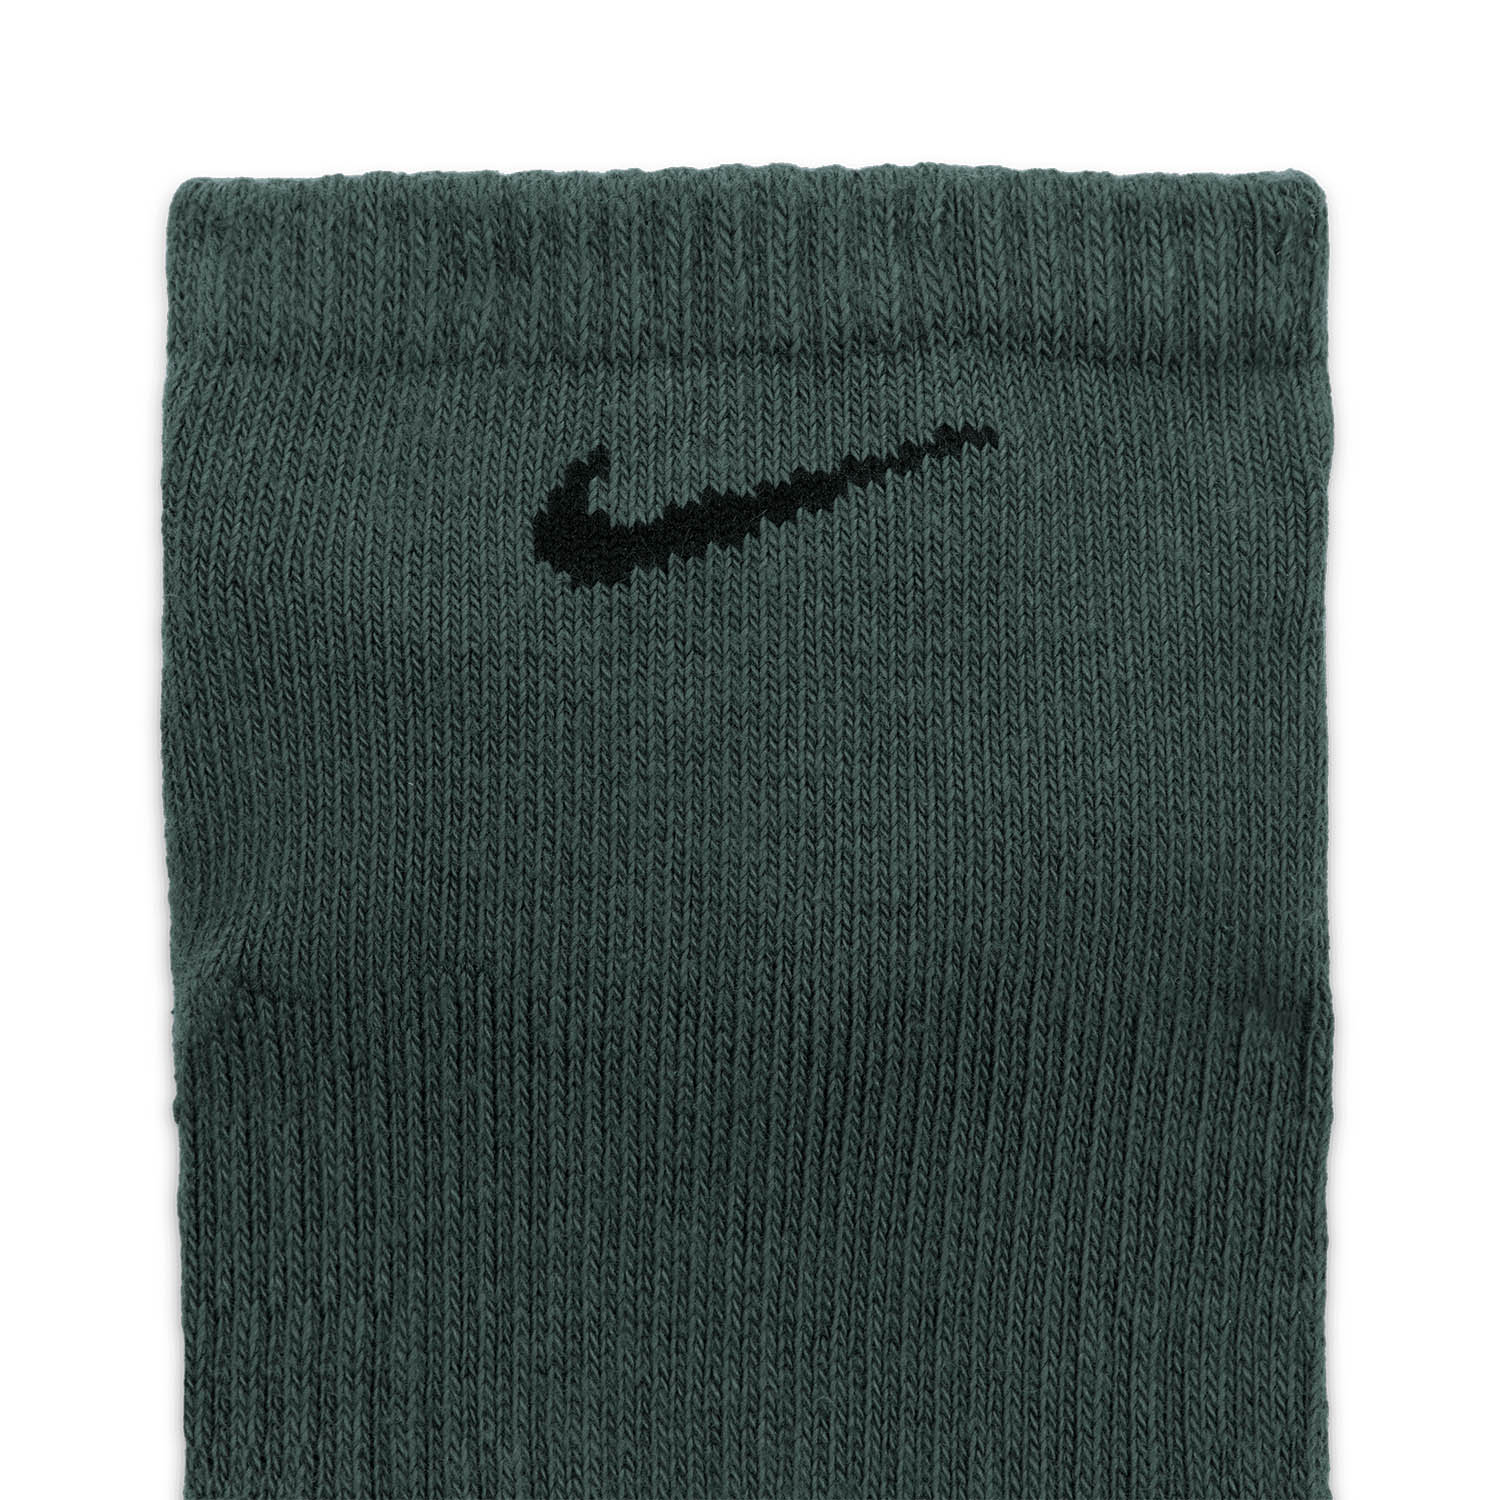 Nike Everyday Plus Cushion x 3 Calcetines - Green/Black